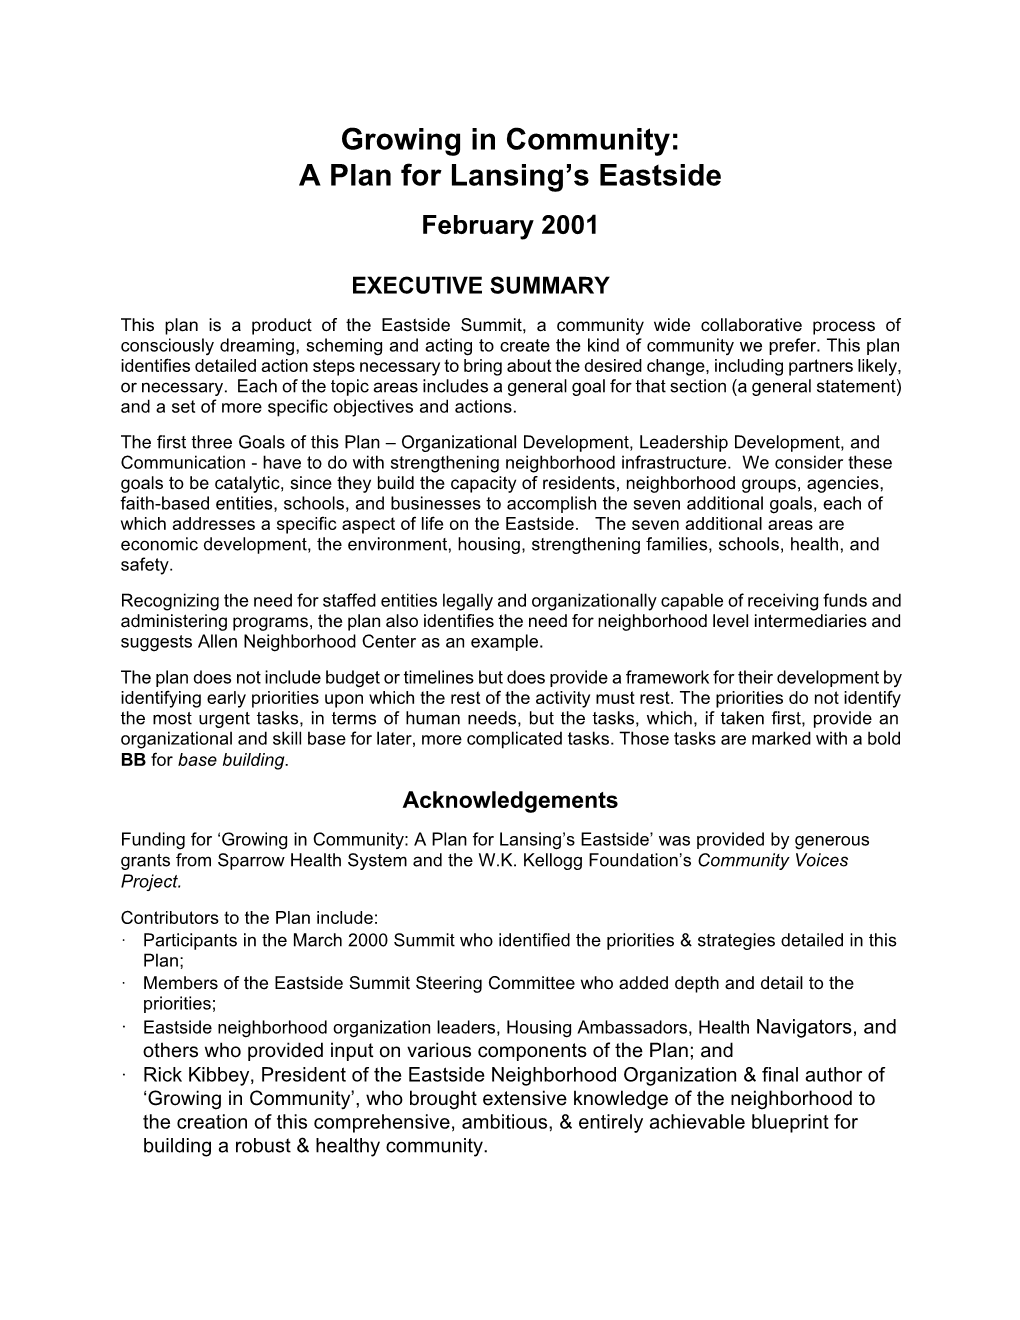 Growing in Community: a Plan for Lansing's Eastside